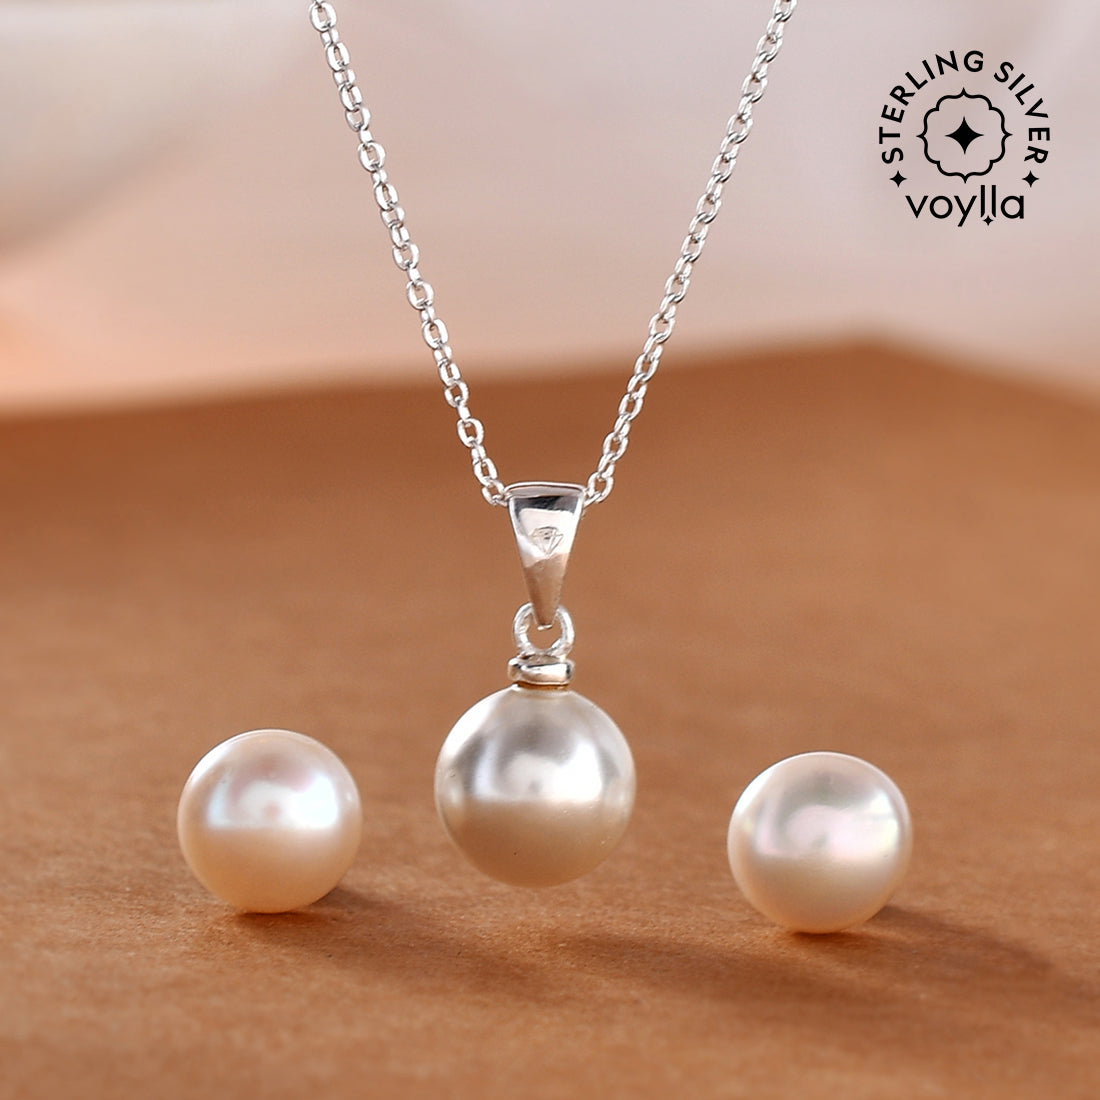 Women's Round White Pearls Embellished Sterling Silver Pendant Set - Voylla